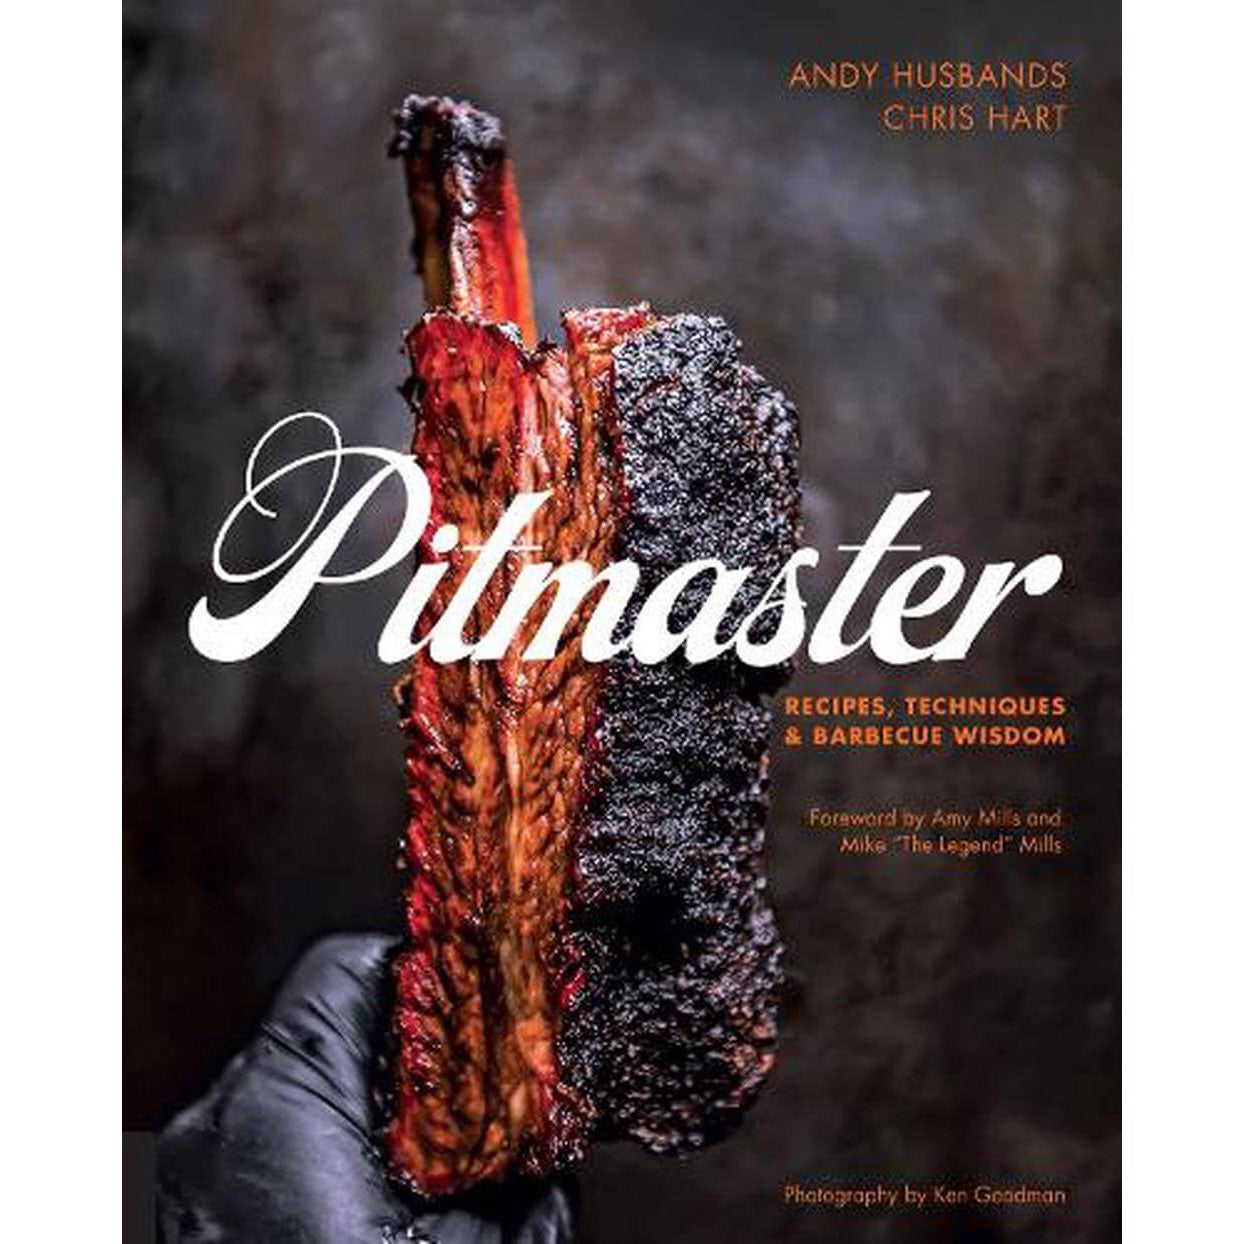 Andy Husbands and Chris Hart: Pitmaster